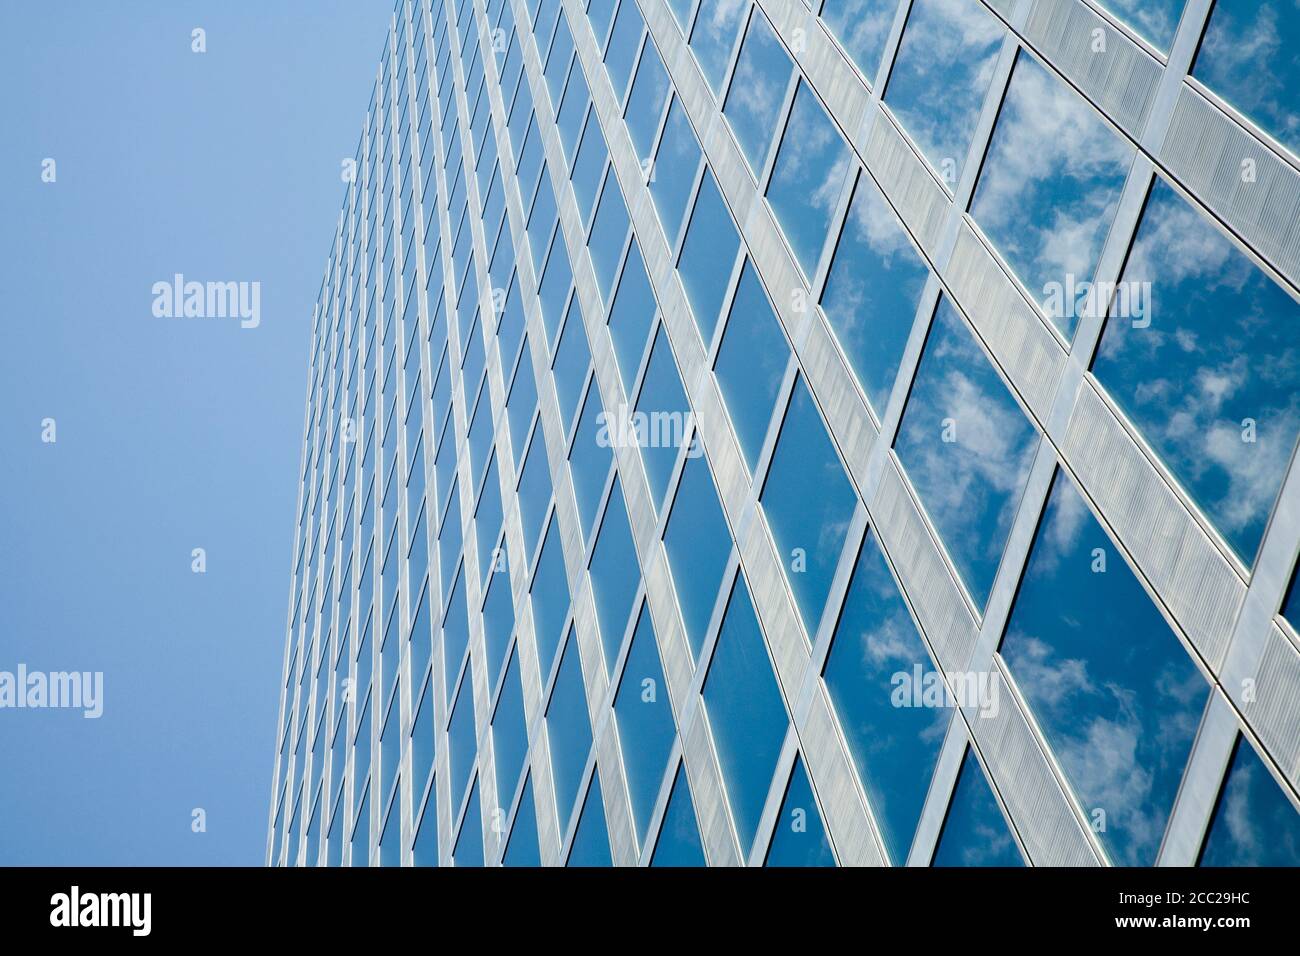 Alemania, Munich, Highlight Towers, close-up Foto de stock